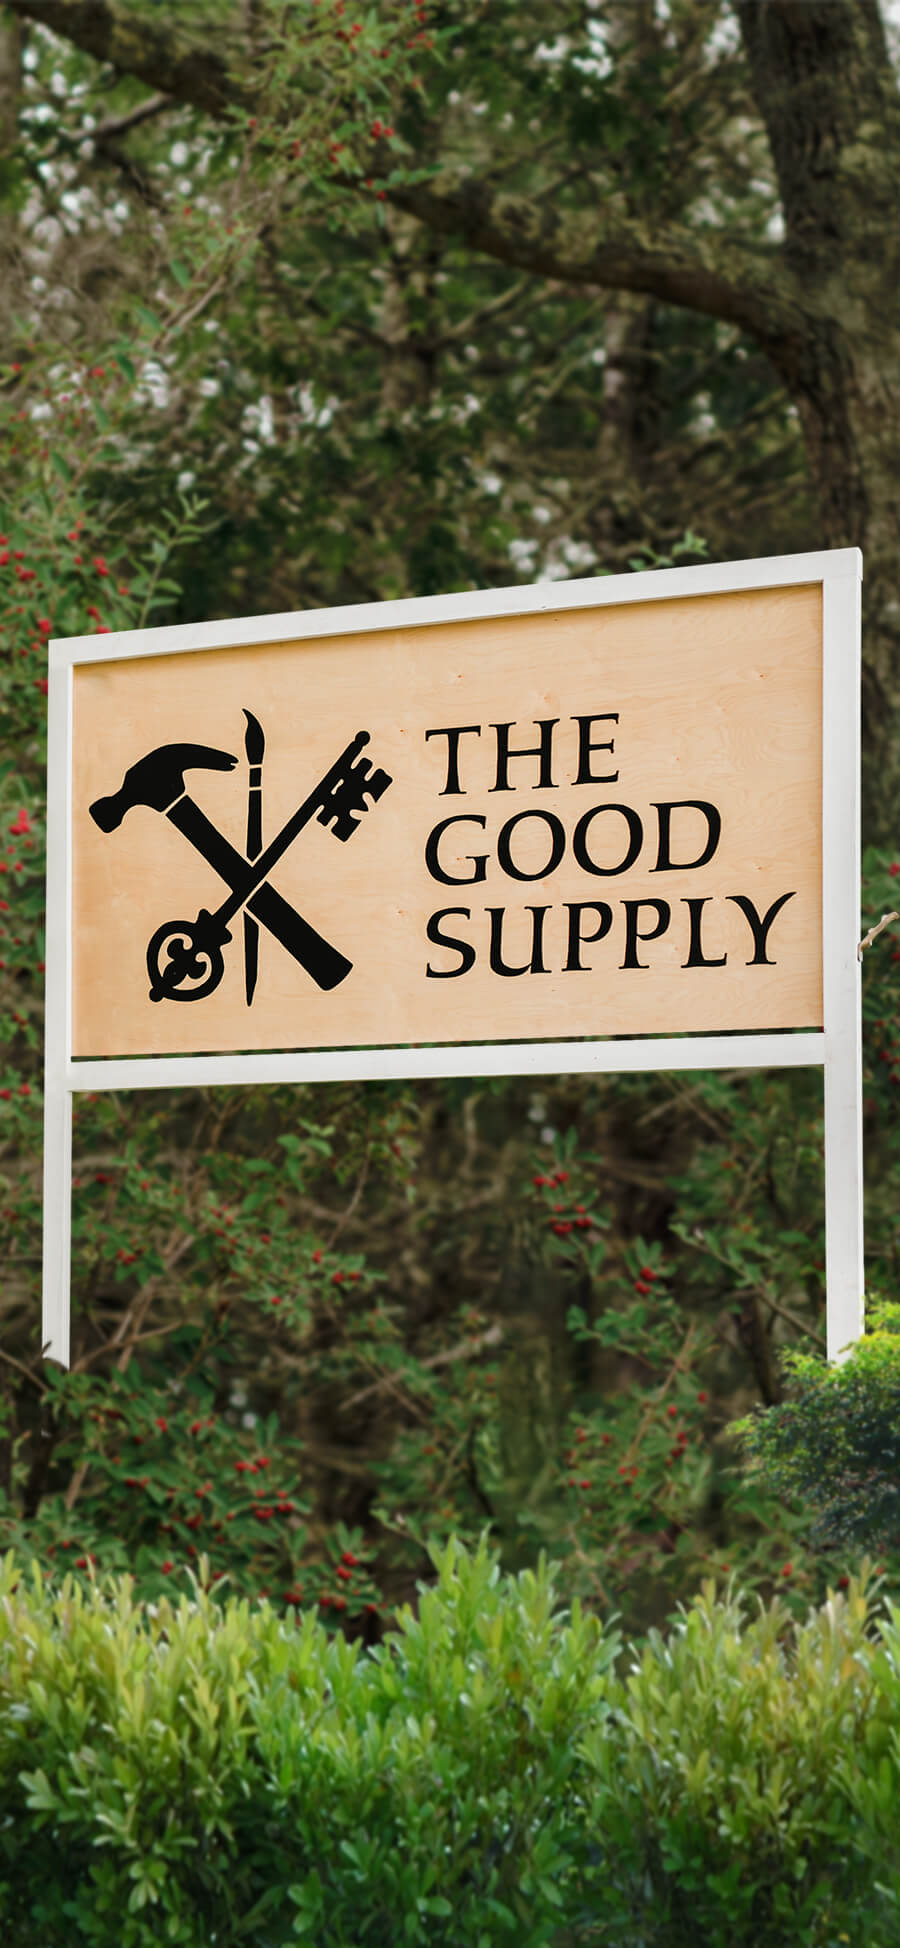 The Good Supply